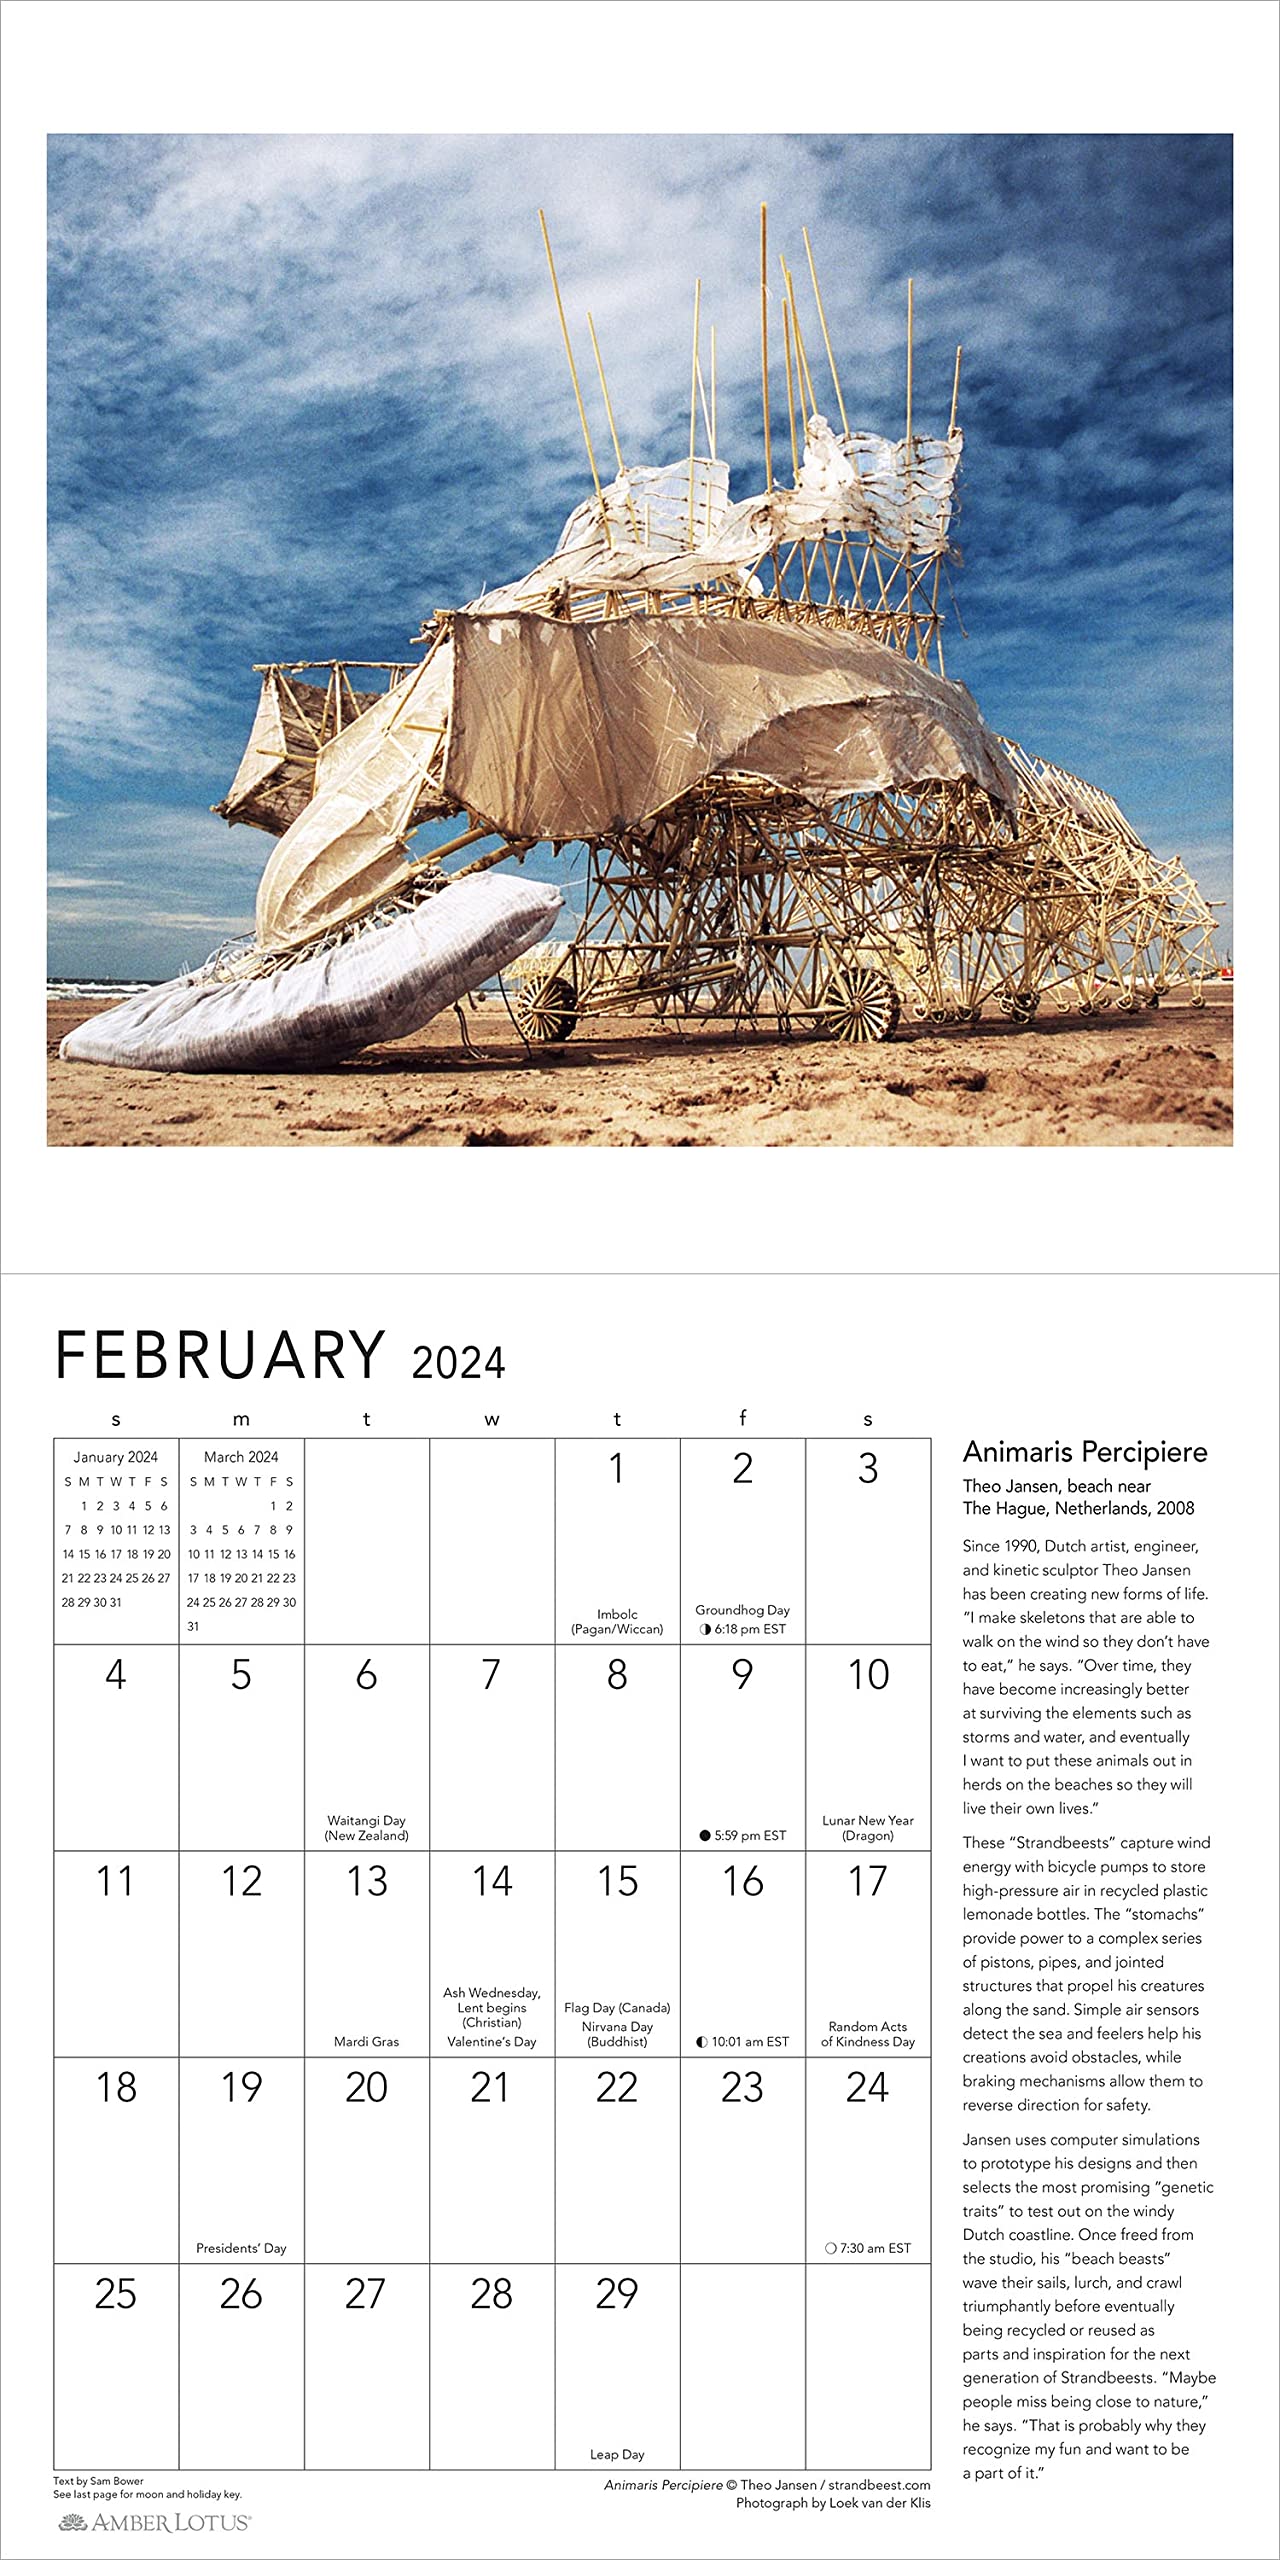 Environmental Art 2024 Wall Calendar: Contemporary Art in the Natural World | 12